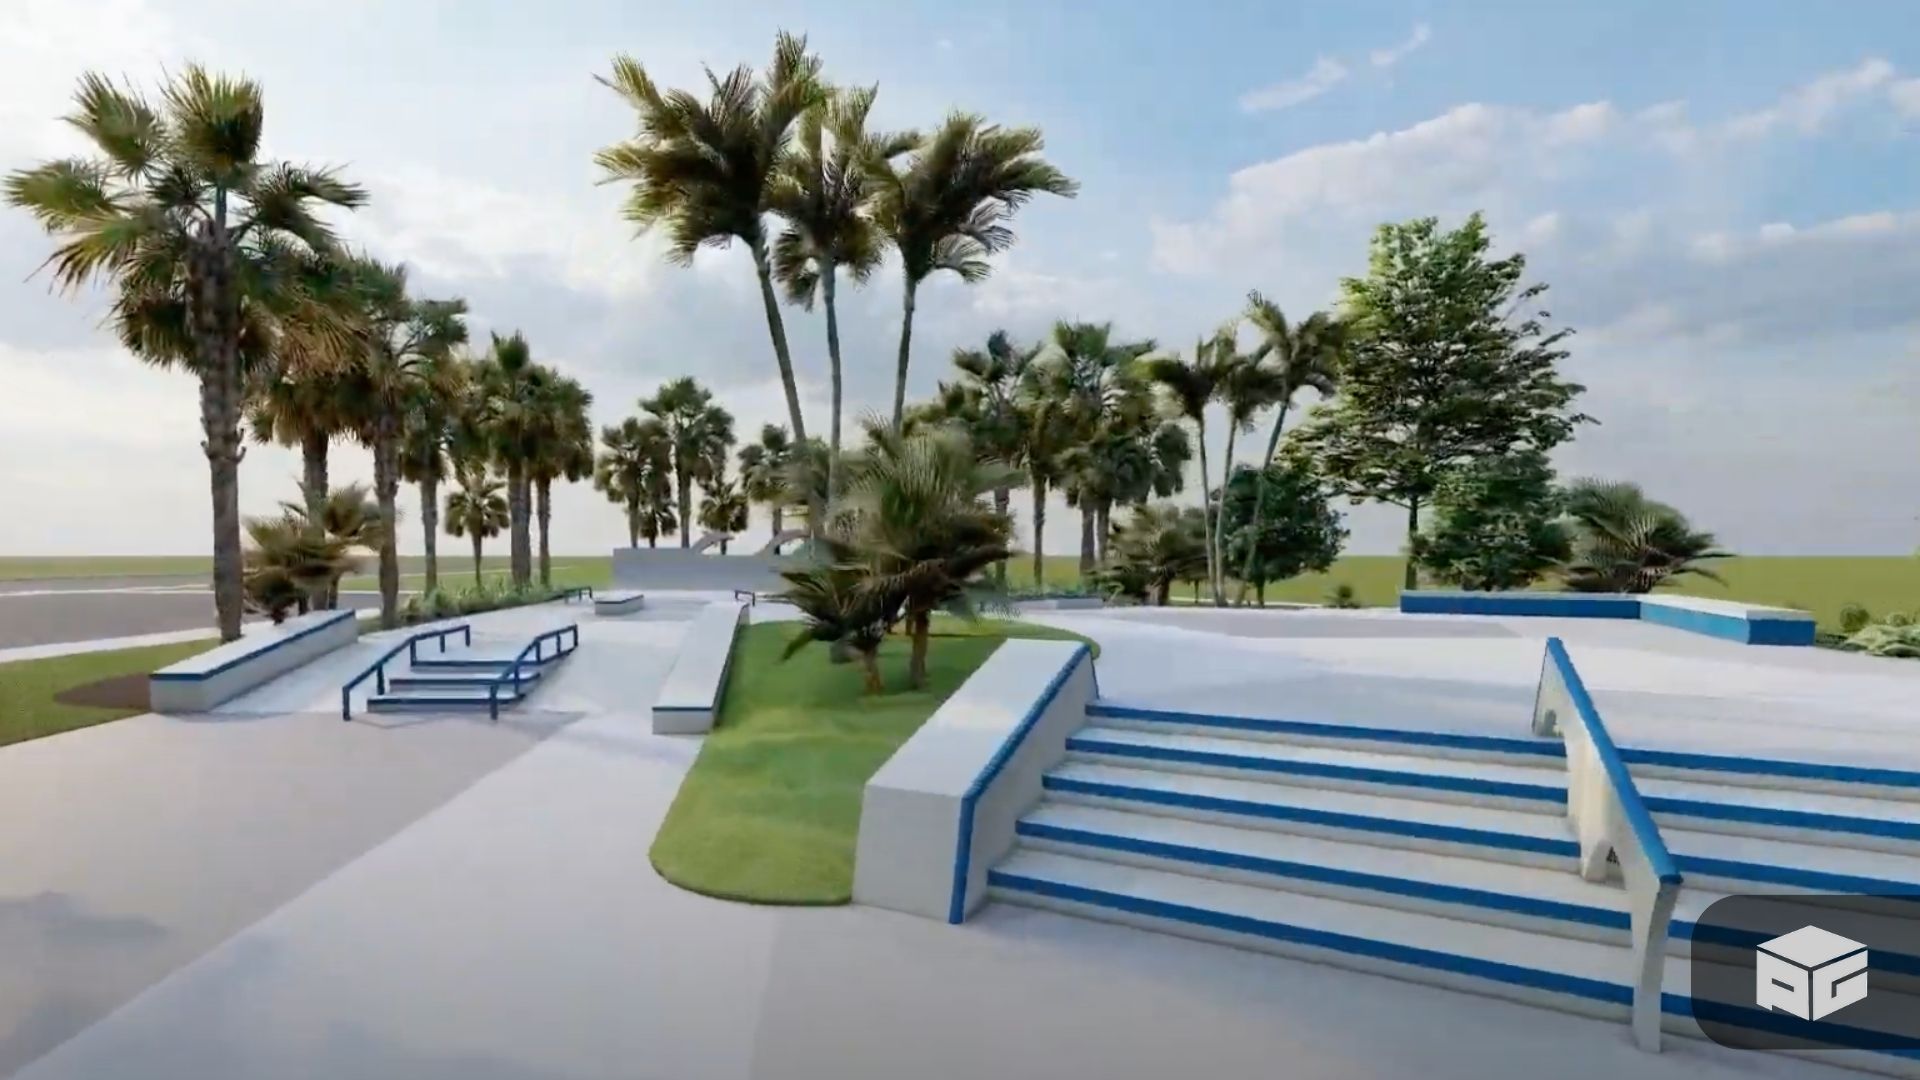 Skatepark Design for Marathon, Florida